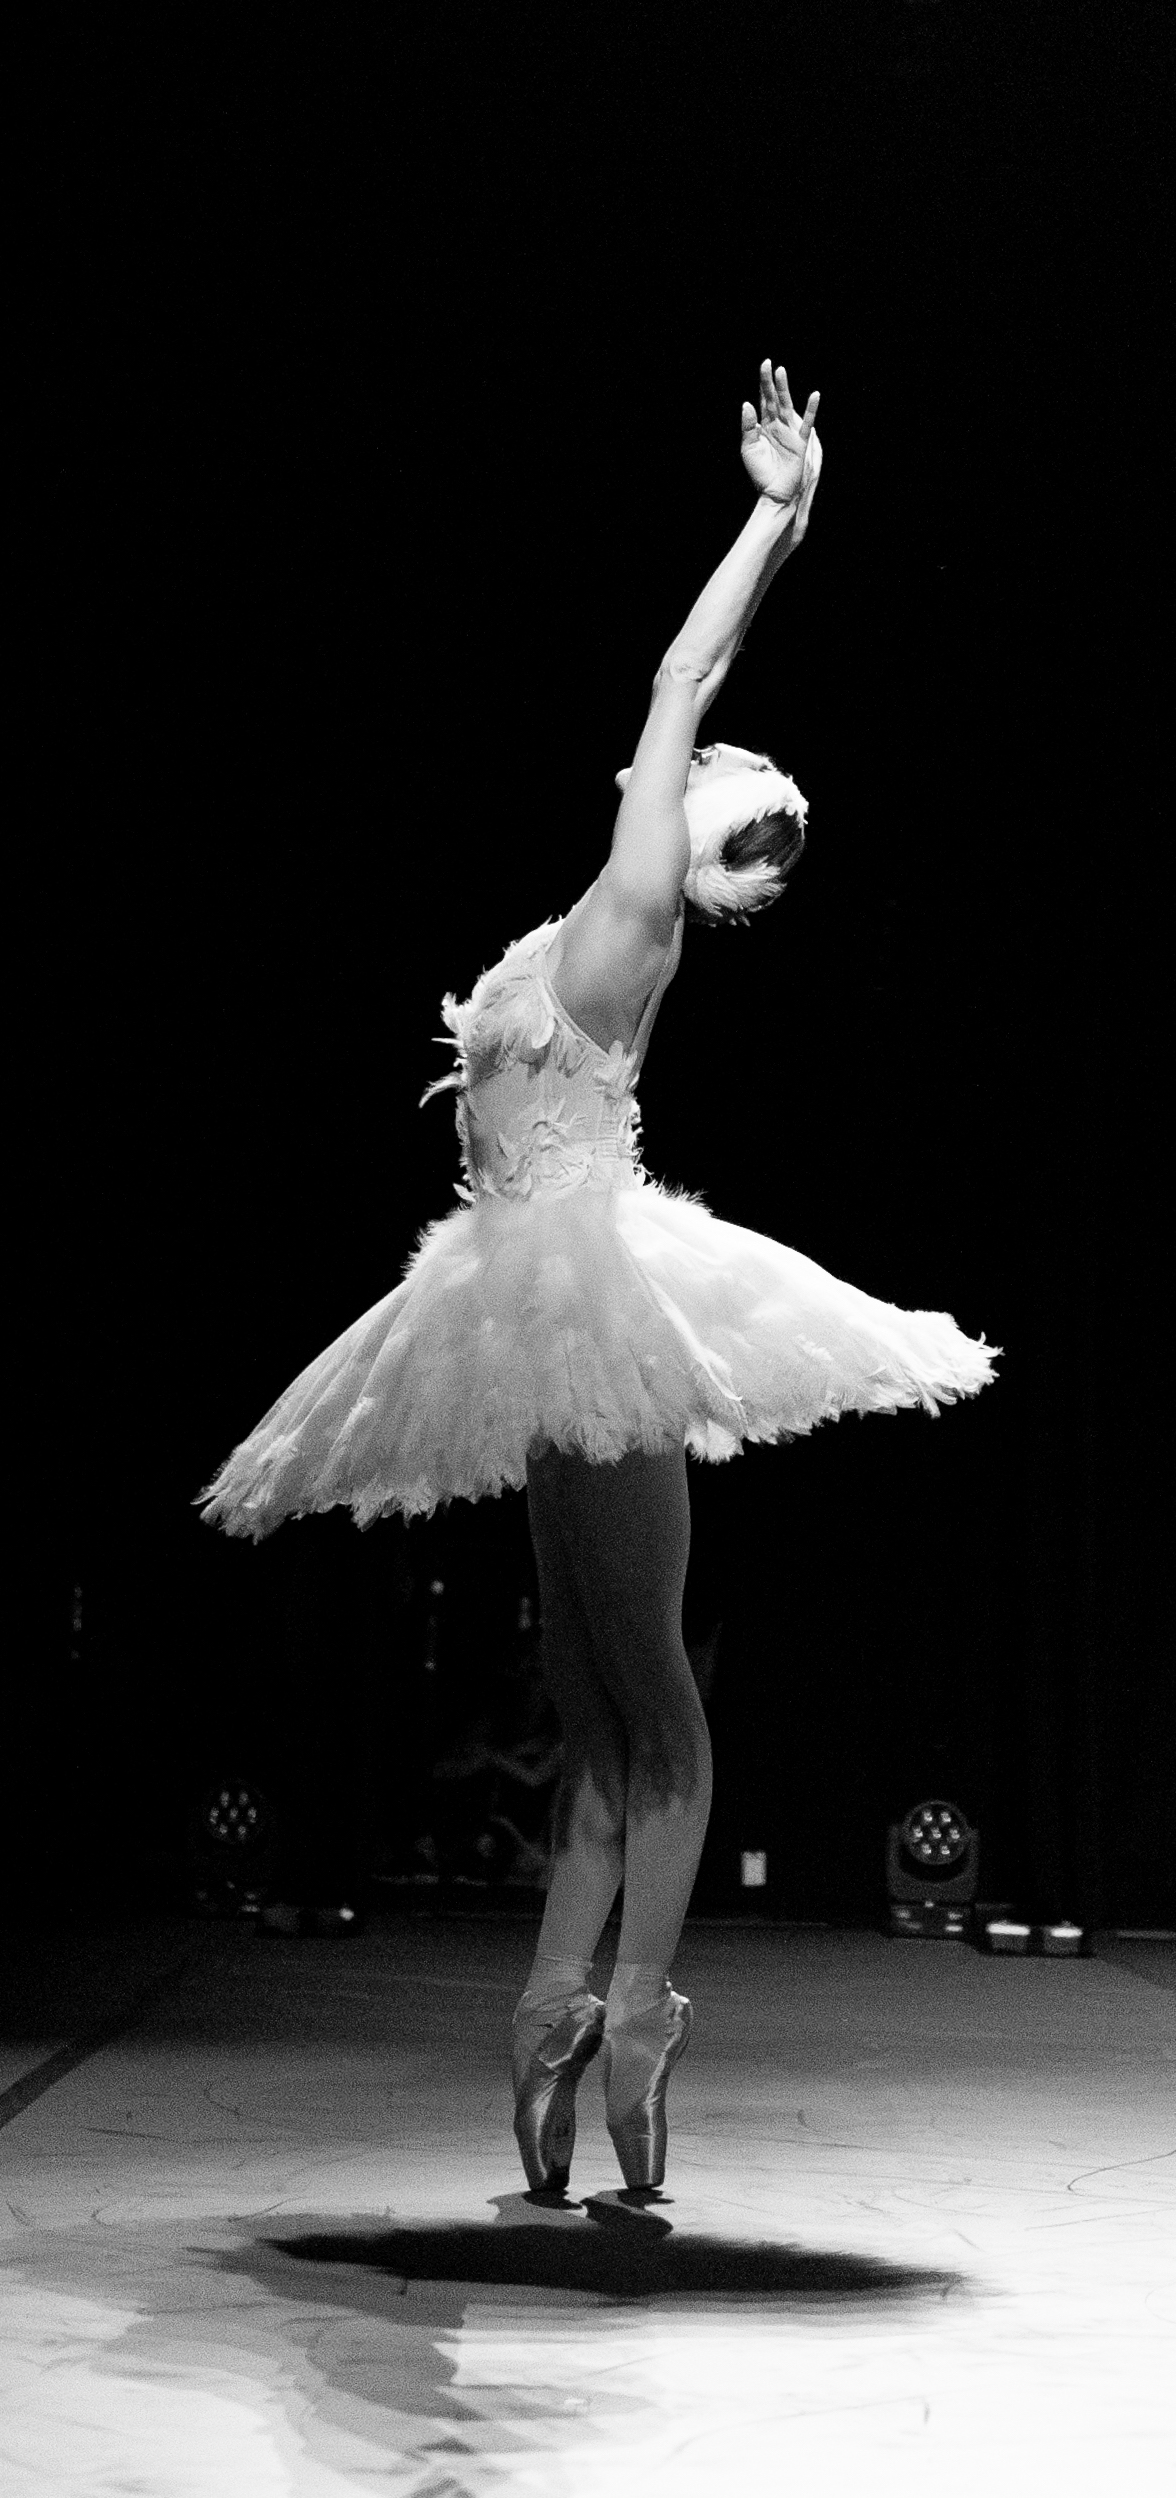 Olga Smirnova in Dying Swan at the Dance for Ukraine gala